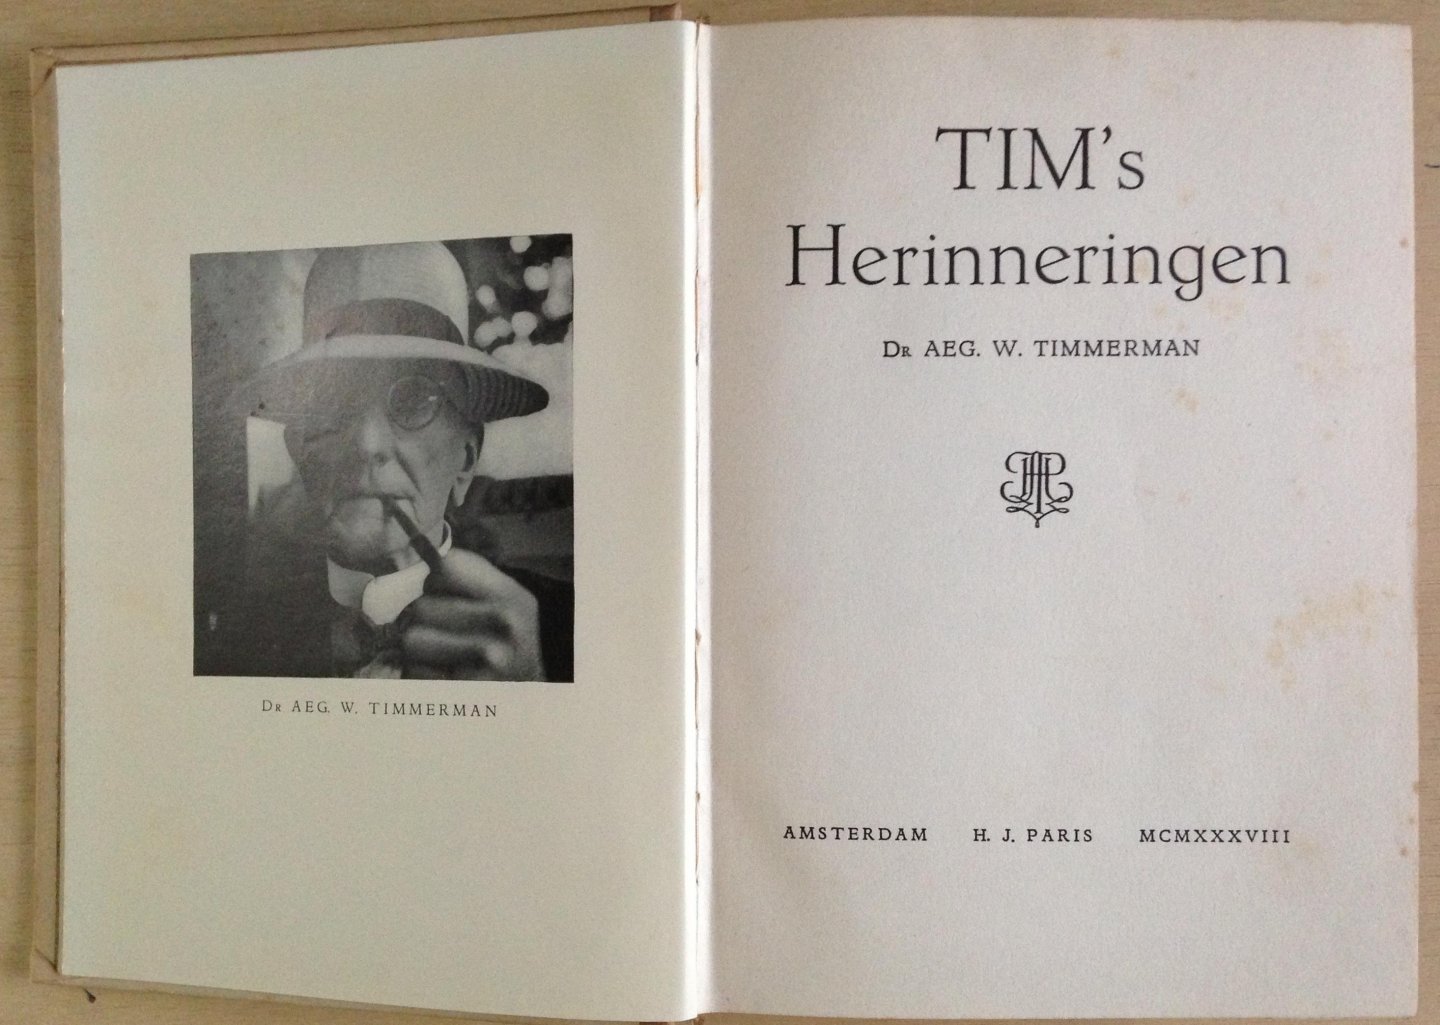 Timmerman, Dr. Aeg. W. - TIM's Herinneringen